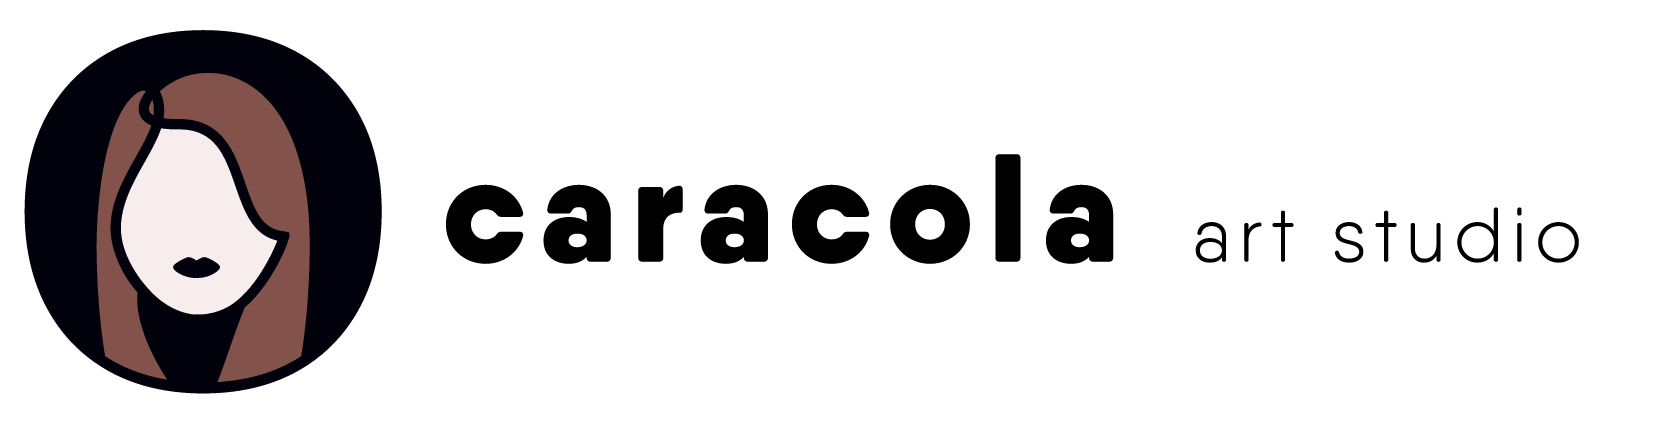 Caracola Art Studio Logo